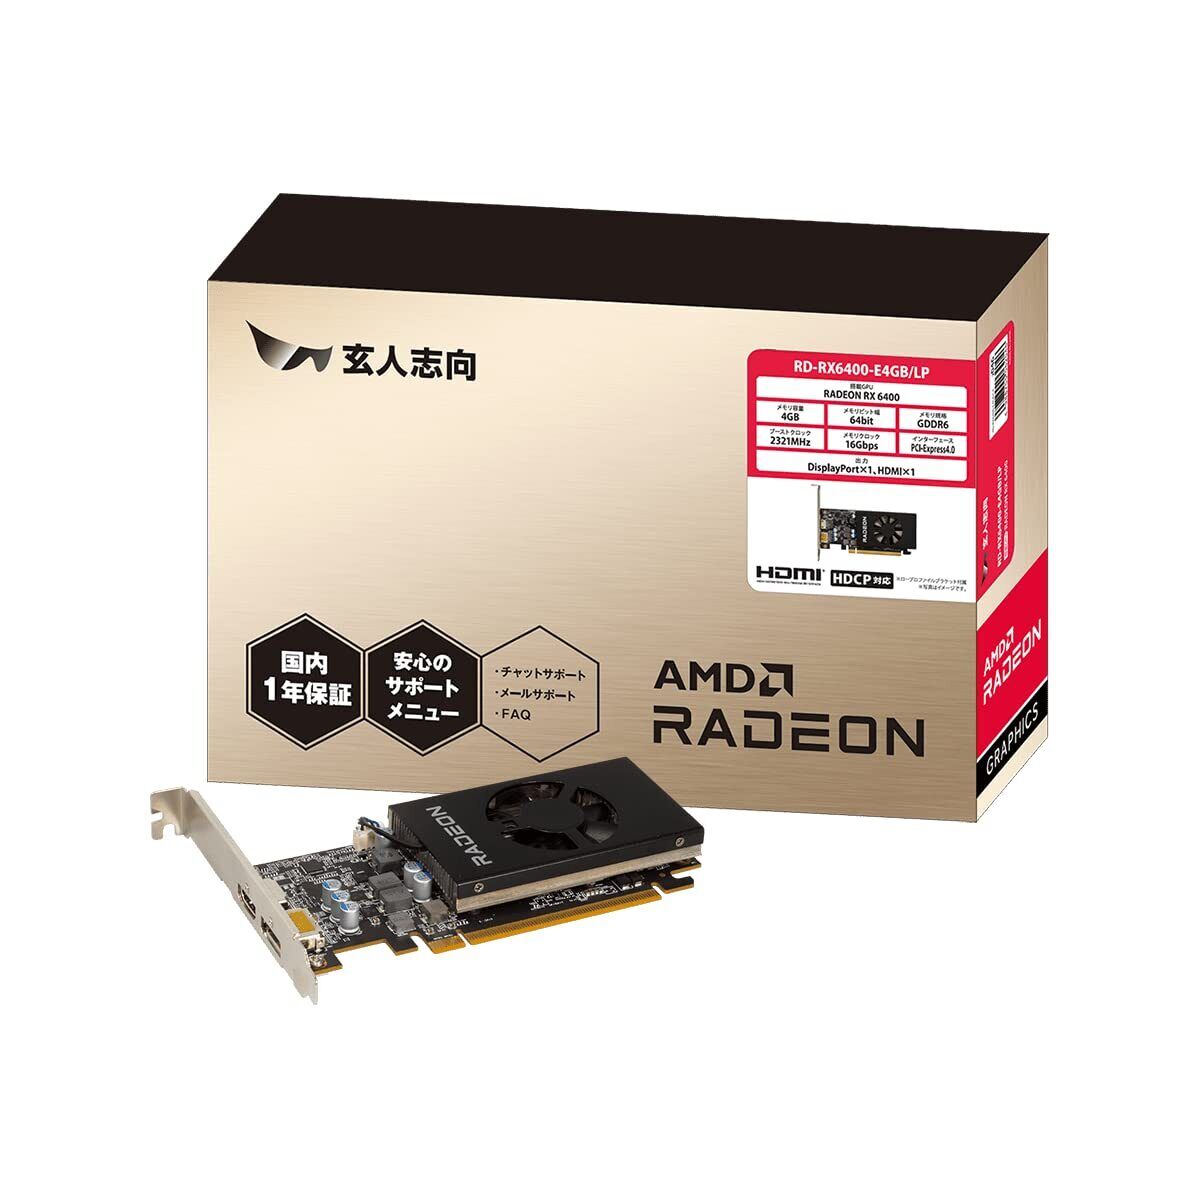 Expert oriented RD-RX6400-E4GB/LP Graphics Board AMD Radeon RX6400 GDDR6